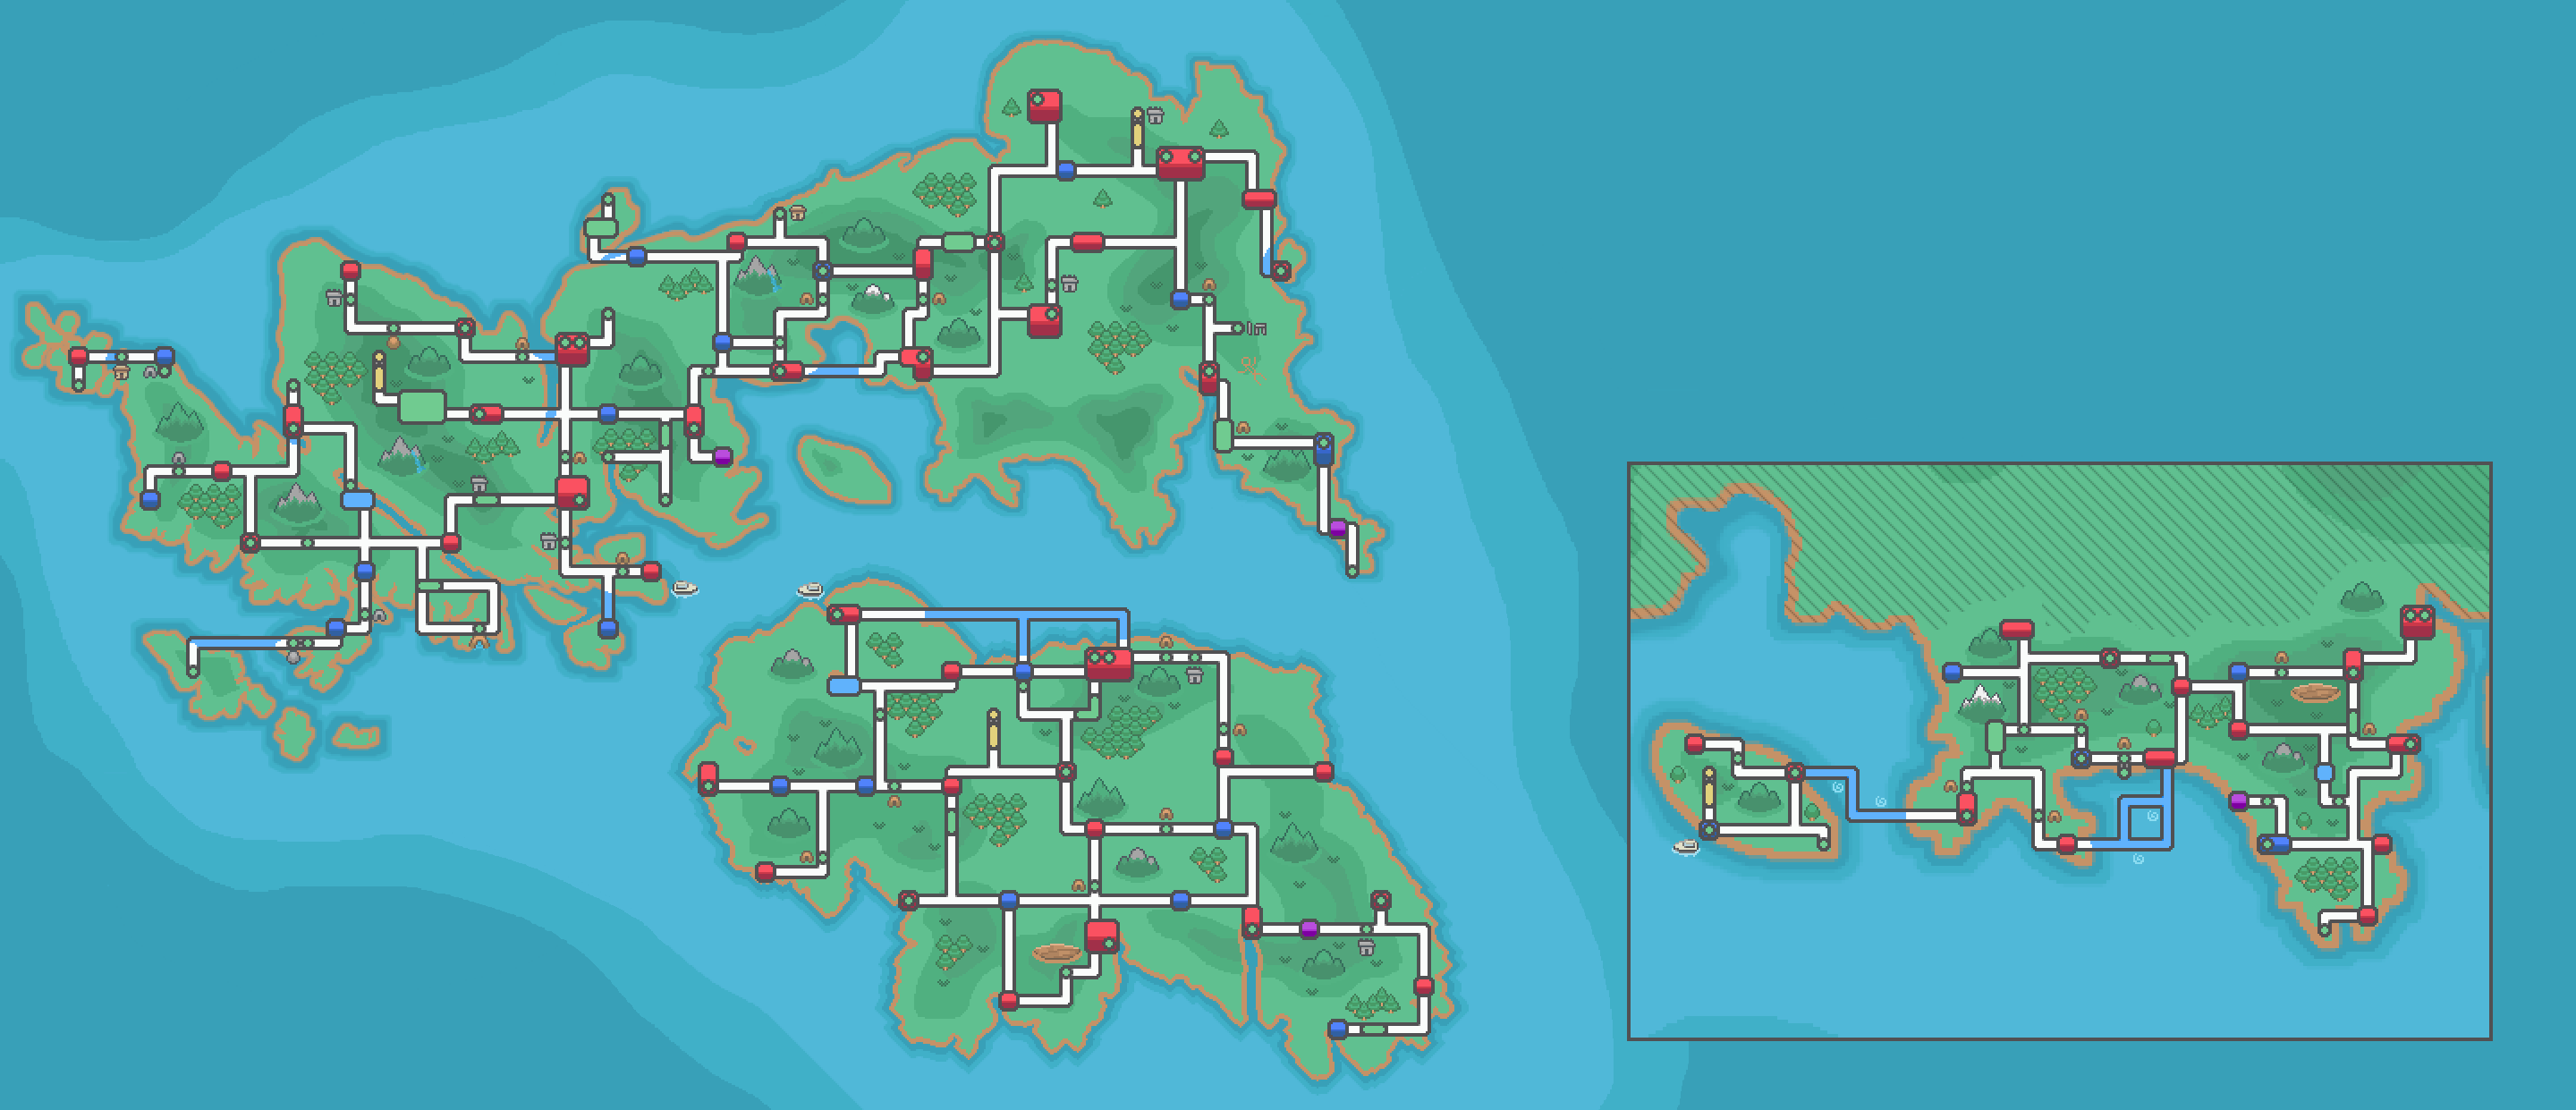 Uk Pokemon Region Fly Map Hg Ss Styled By Descendedfromullr On Deviantart